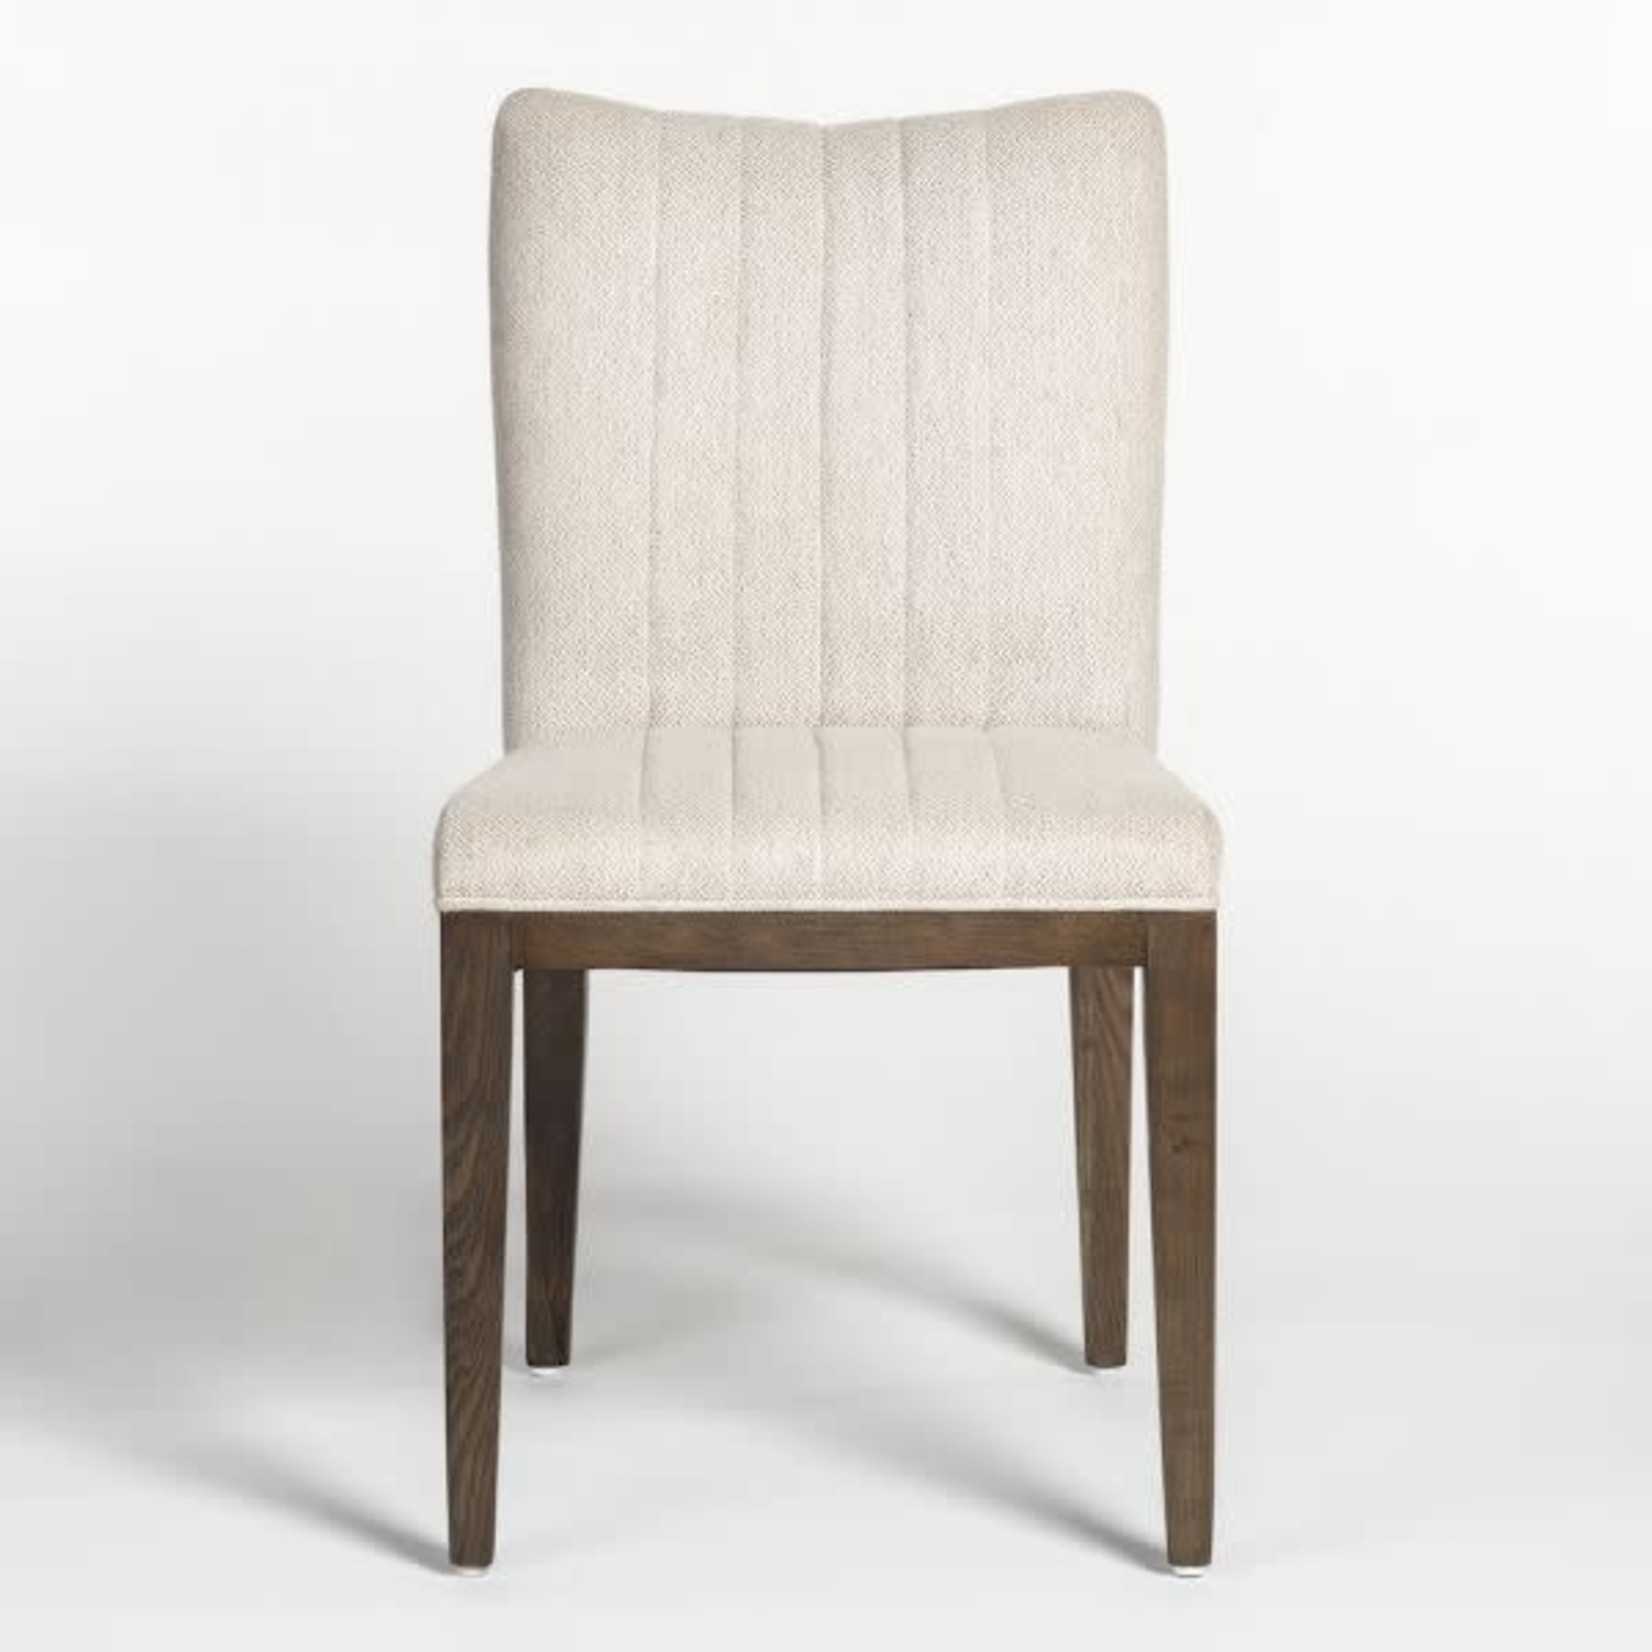 Mickler & Co. Ren Dining Chair